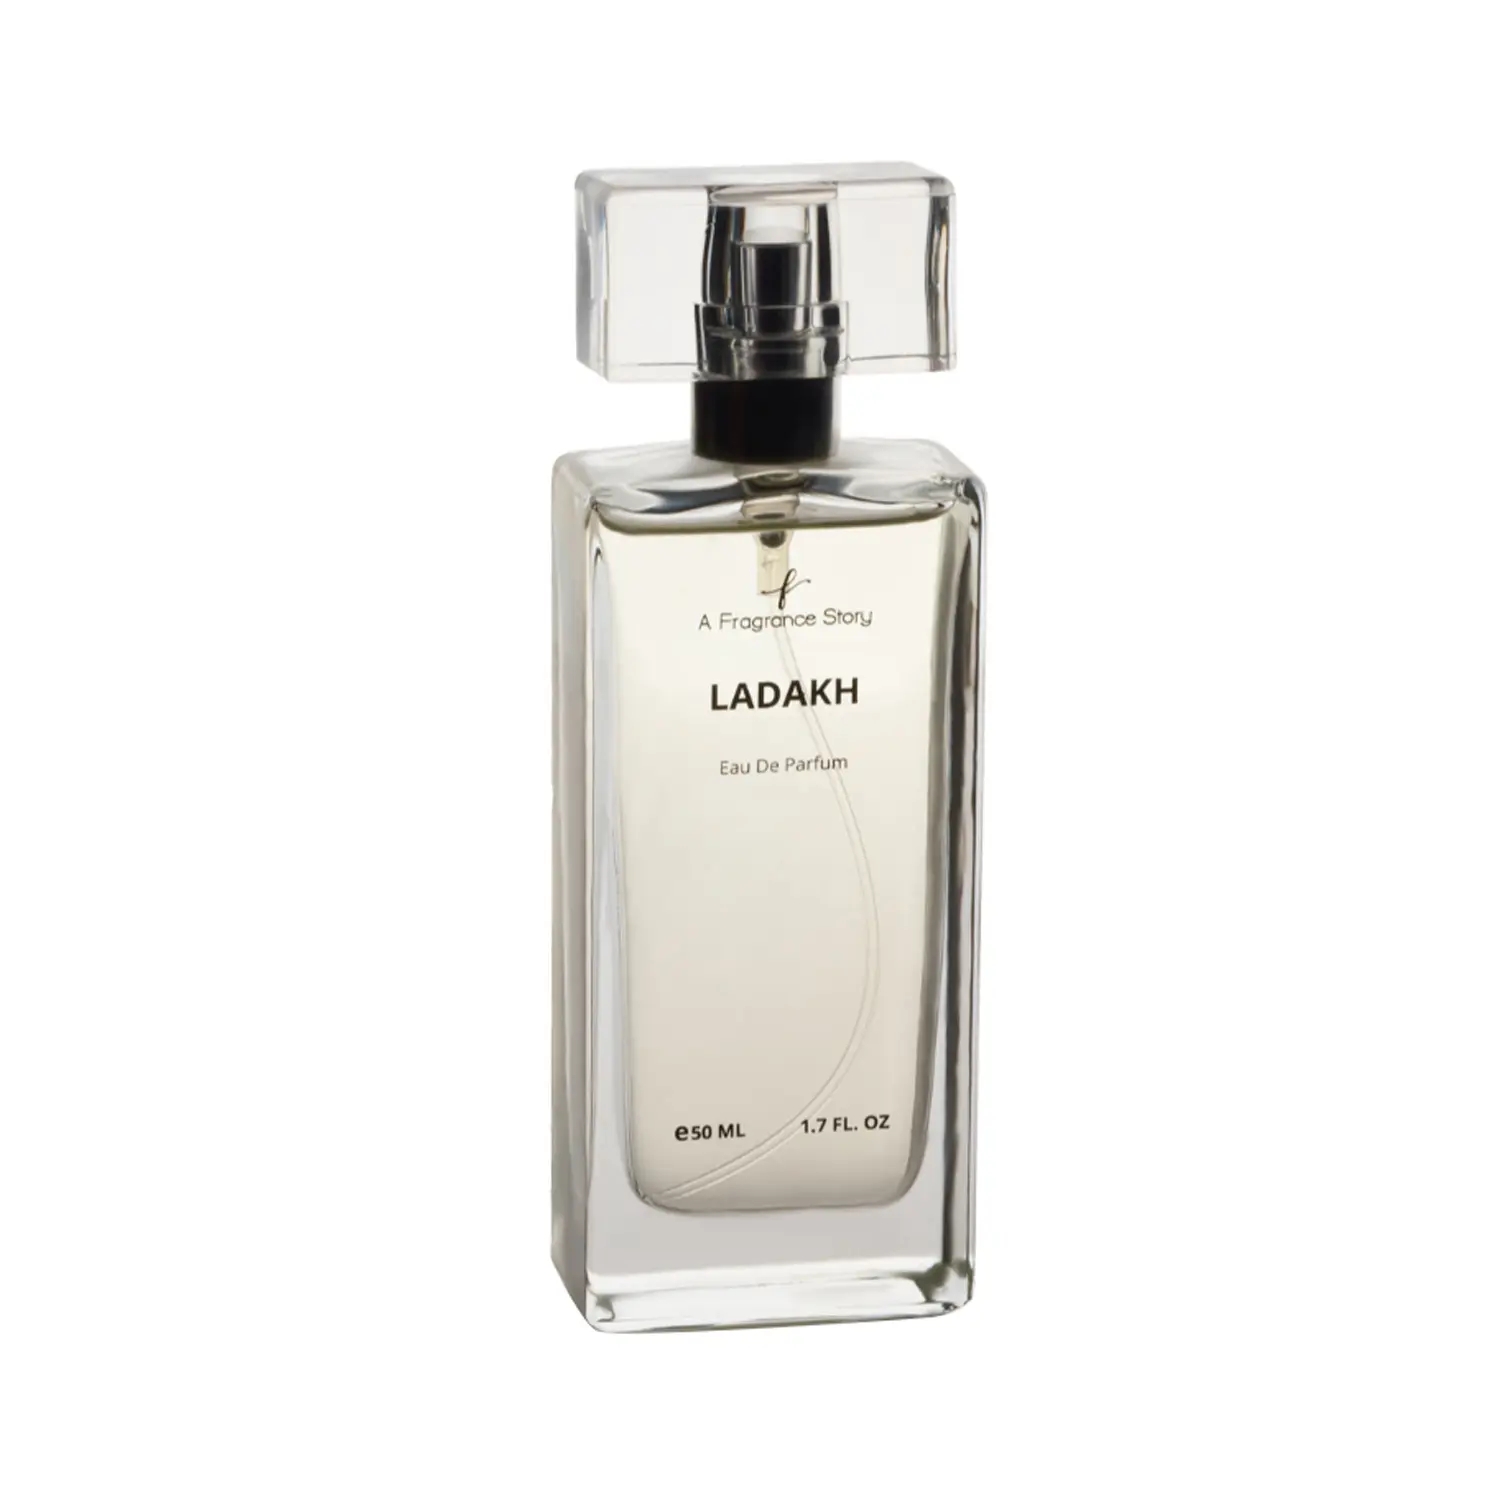 A Fragrance Story | A Fragrance Story Ladakh Perfume (50ml)